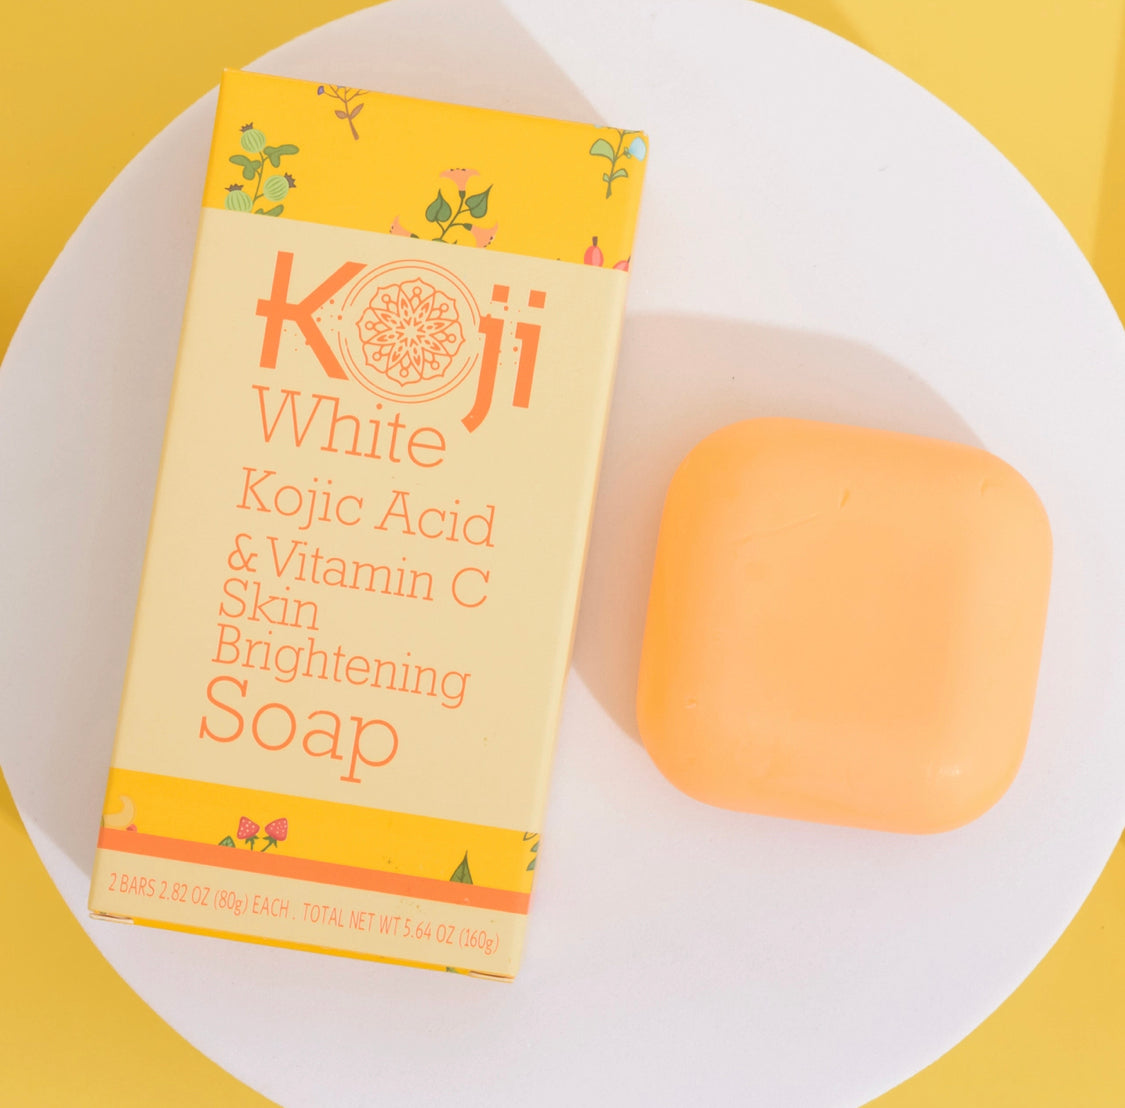 Kojic Acid & Vitamin C Skin Brightening Soap